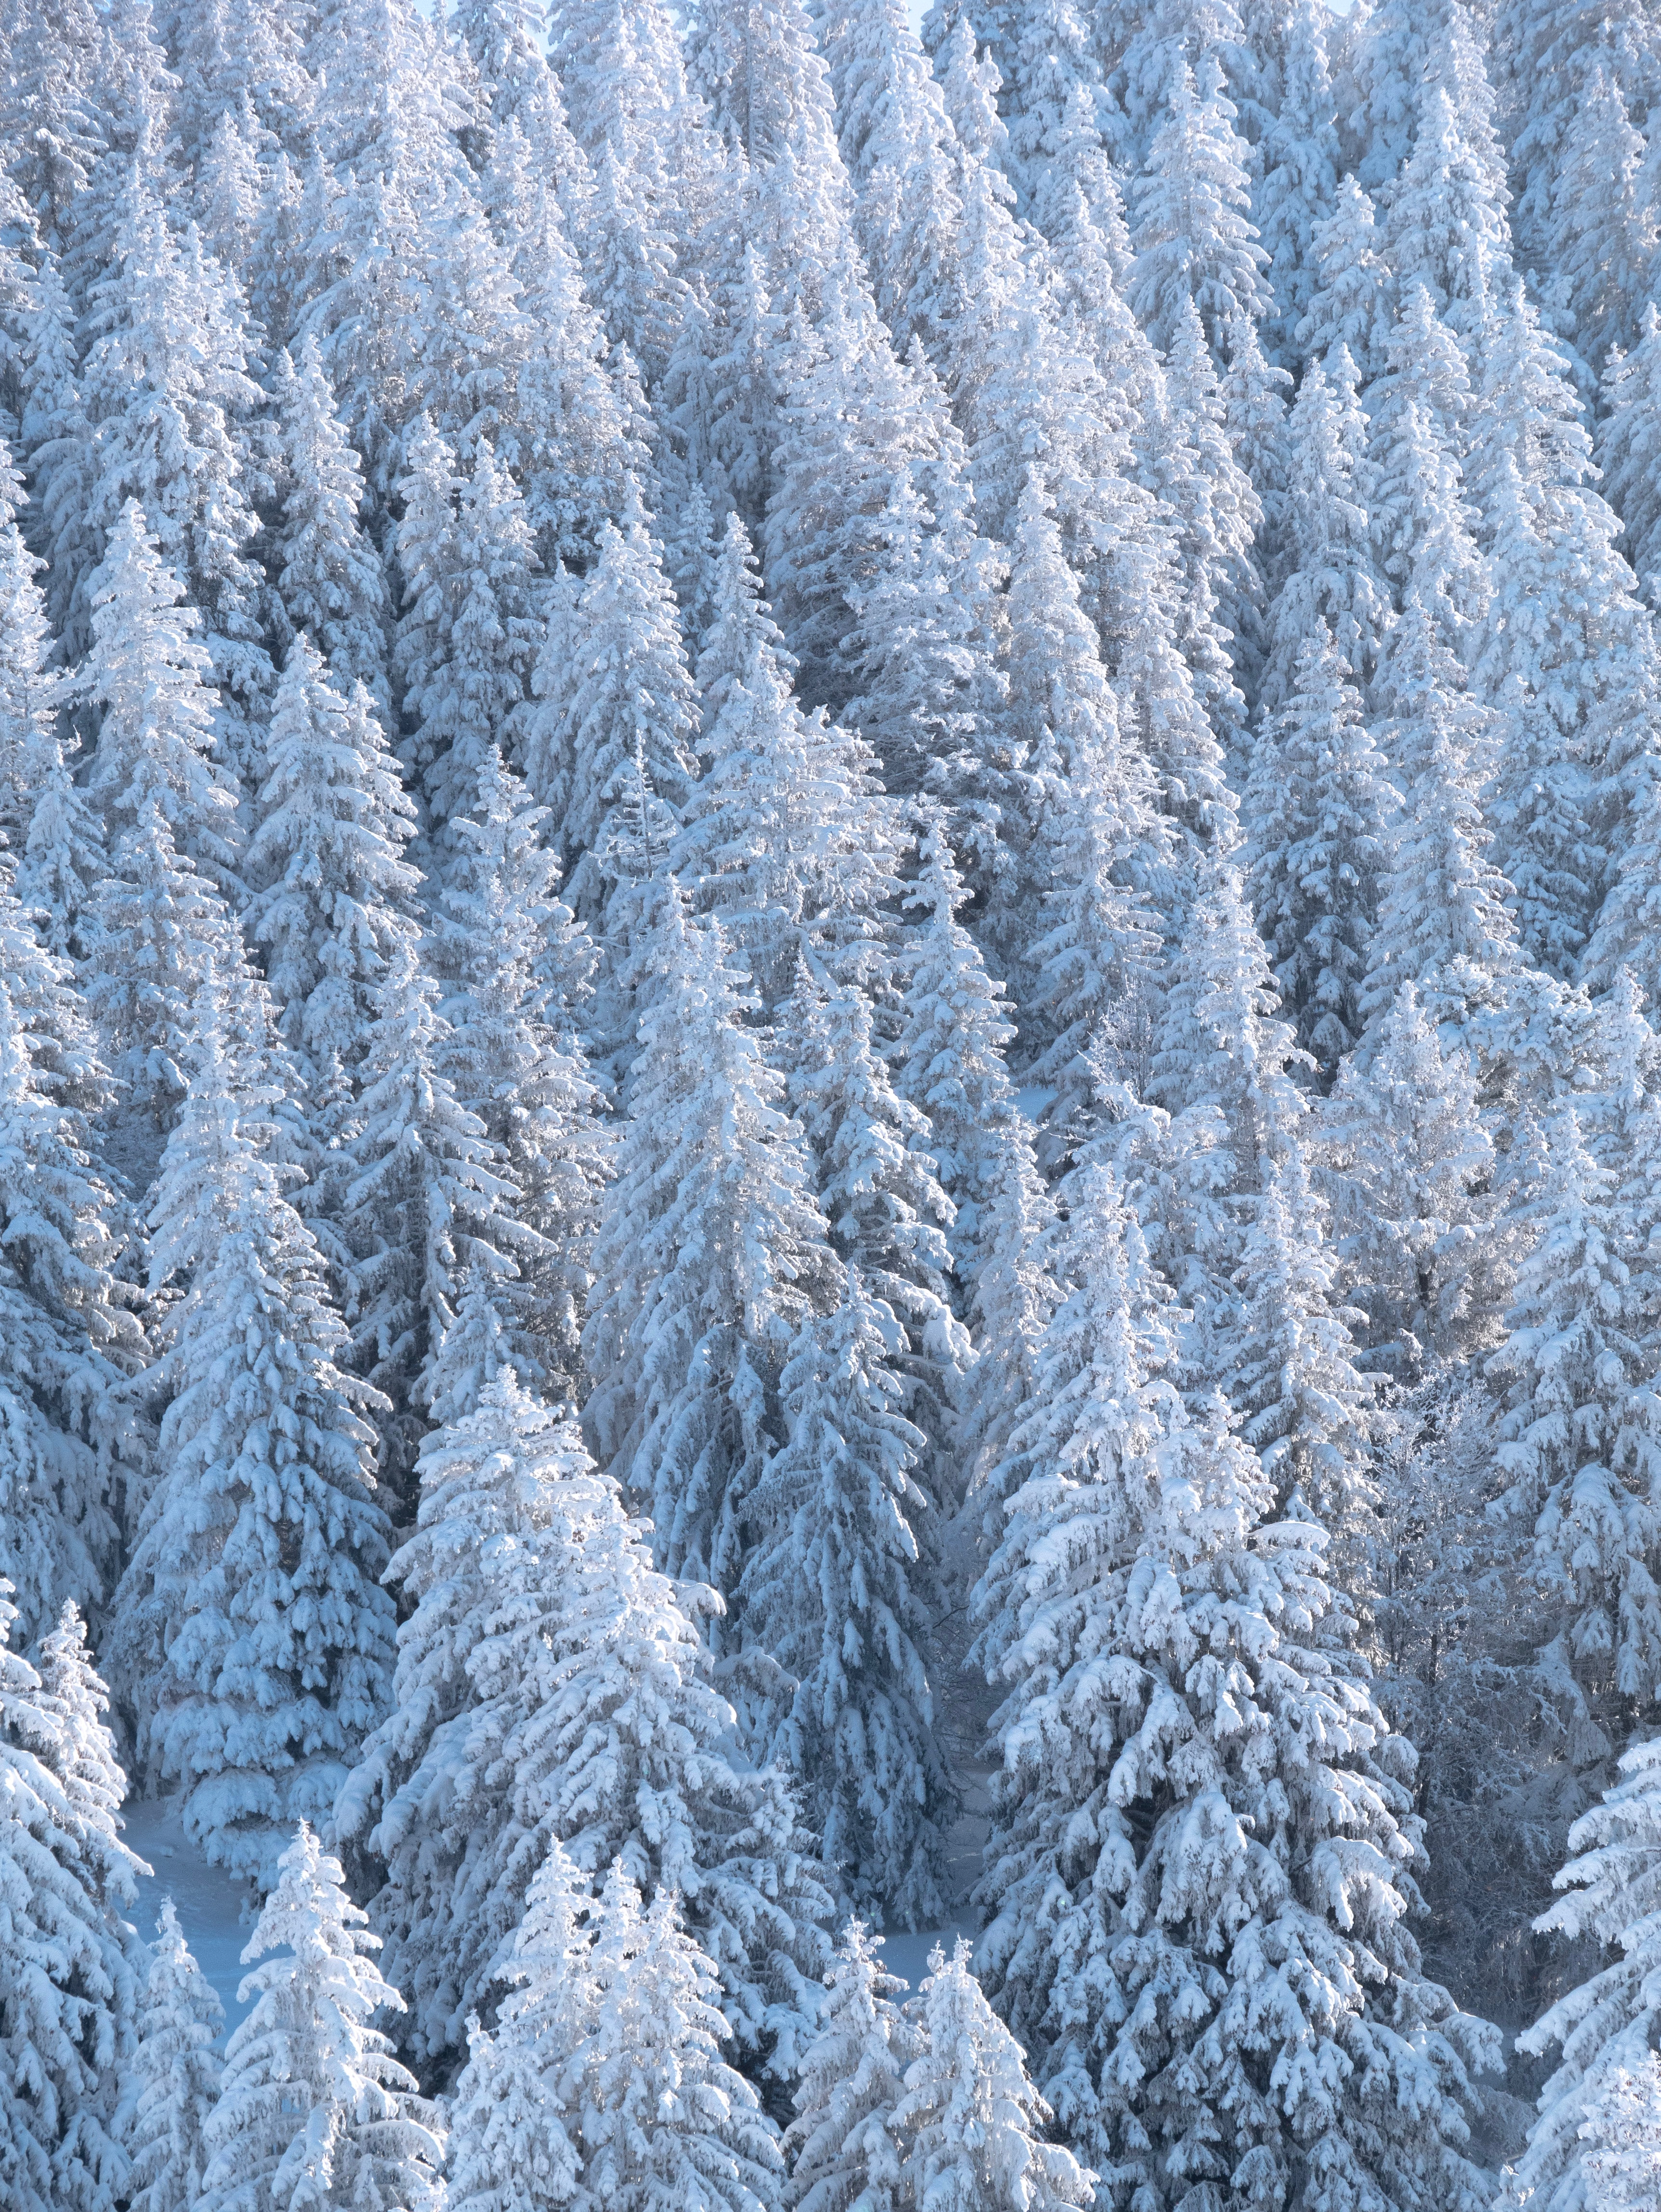 152163 descargar imagen naturaleza, árboles, nieve, abetos, blanco, bosque: fondos de pantalla y protectores de pantalla gratis